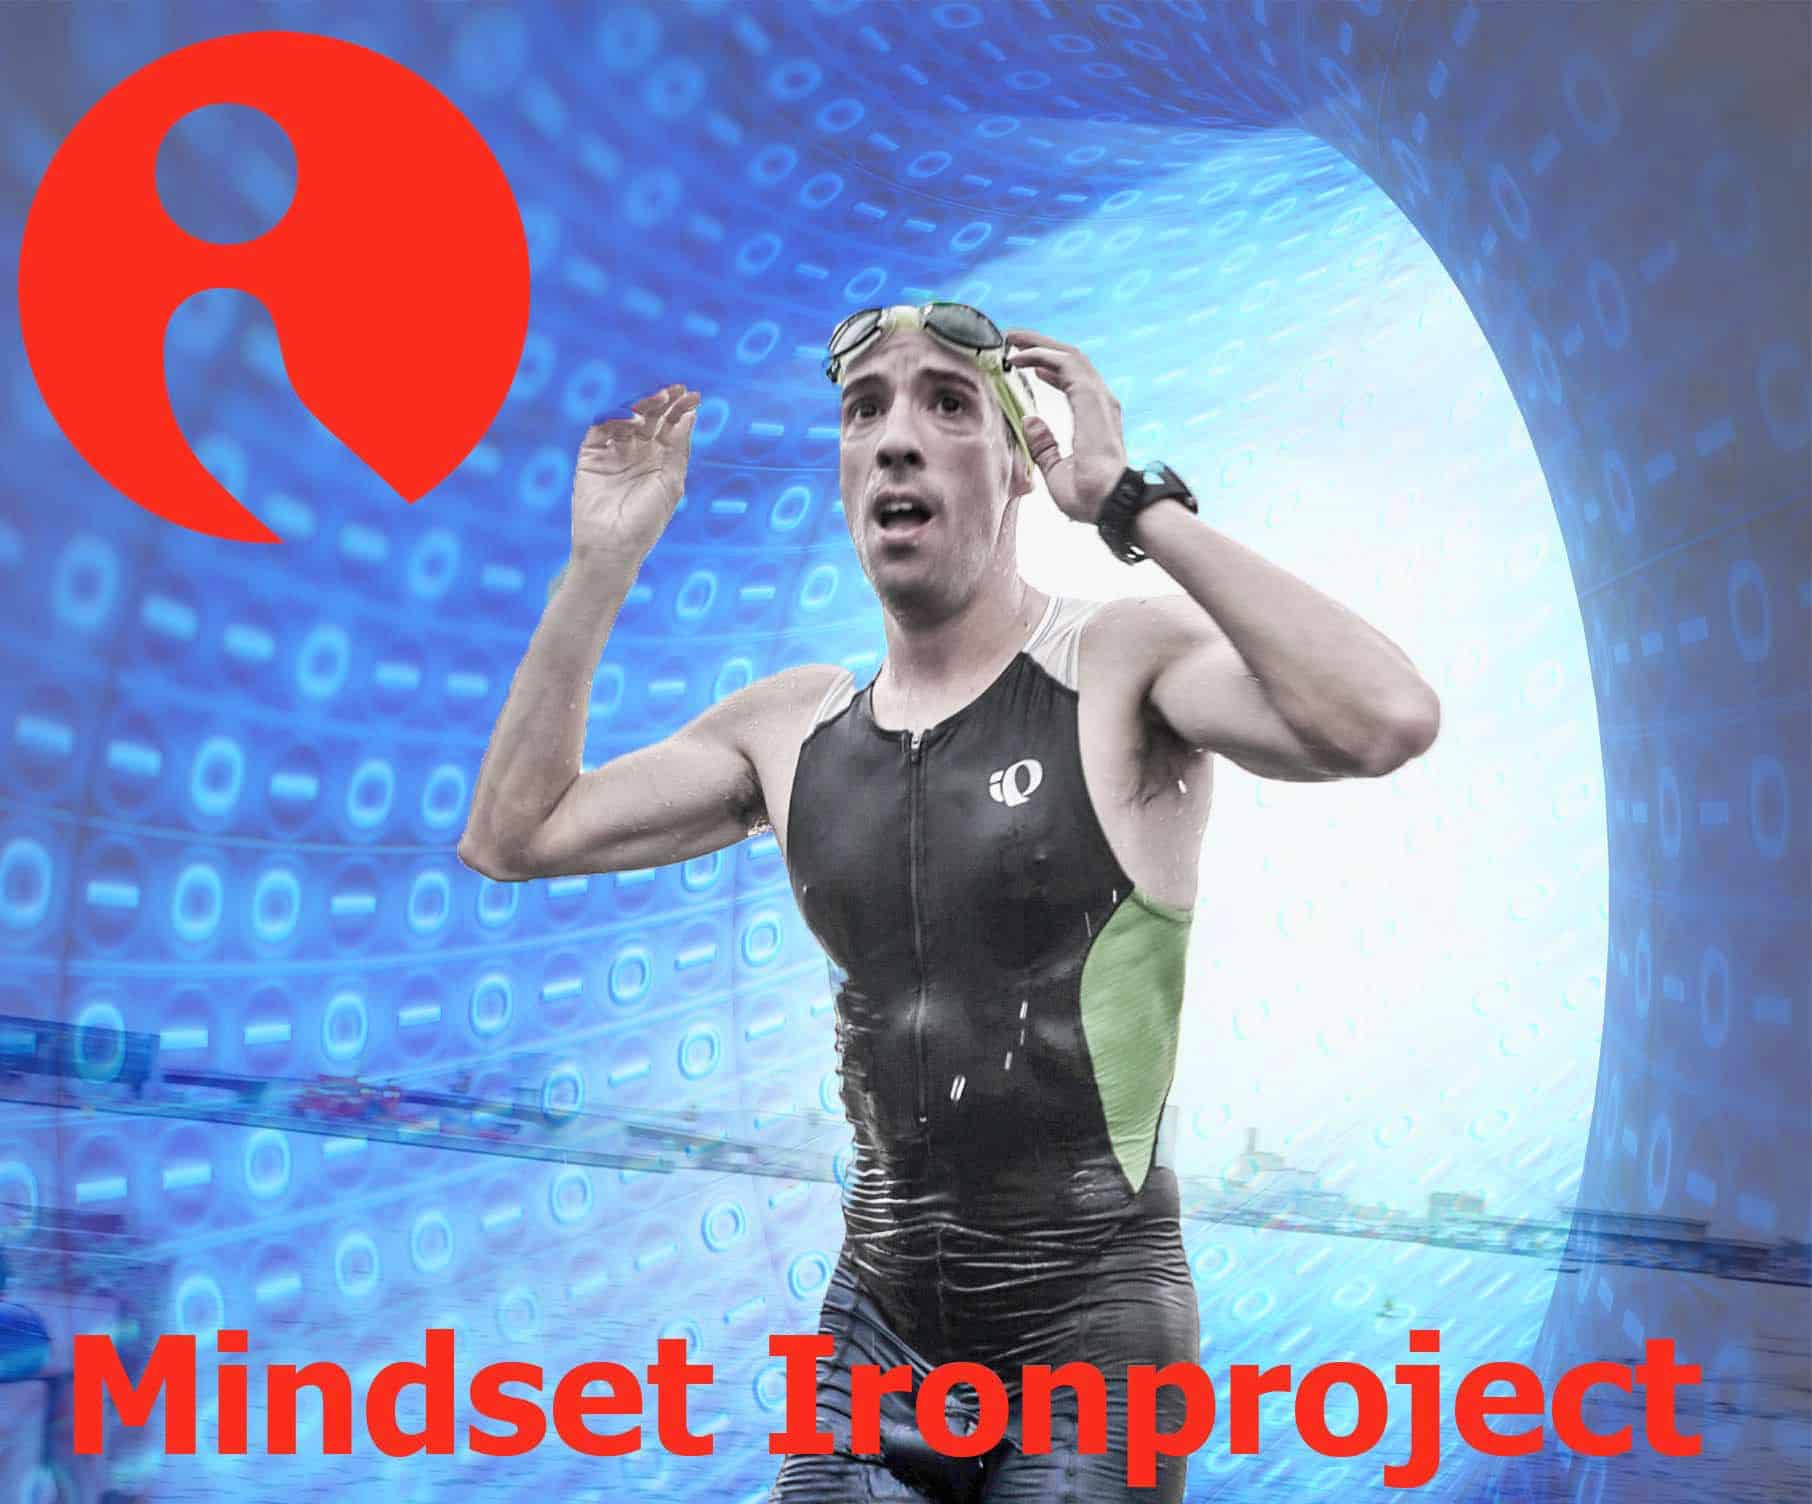 [Mindset Ironproject] Mente y cuerpo al límite: Mindset Ironproject